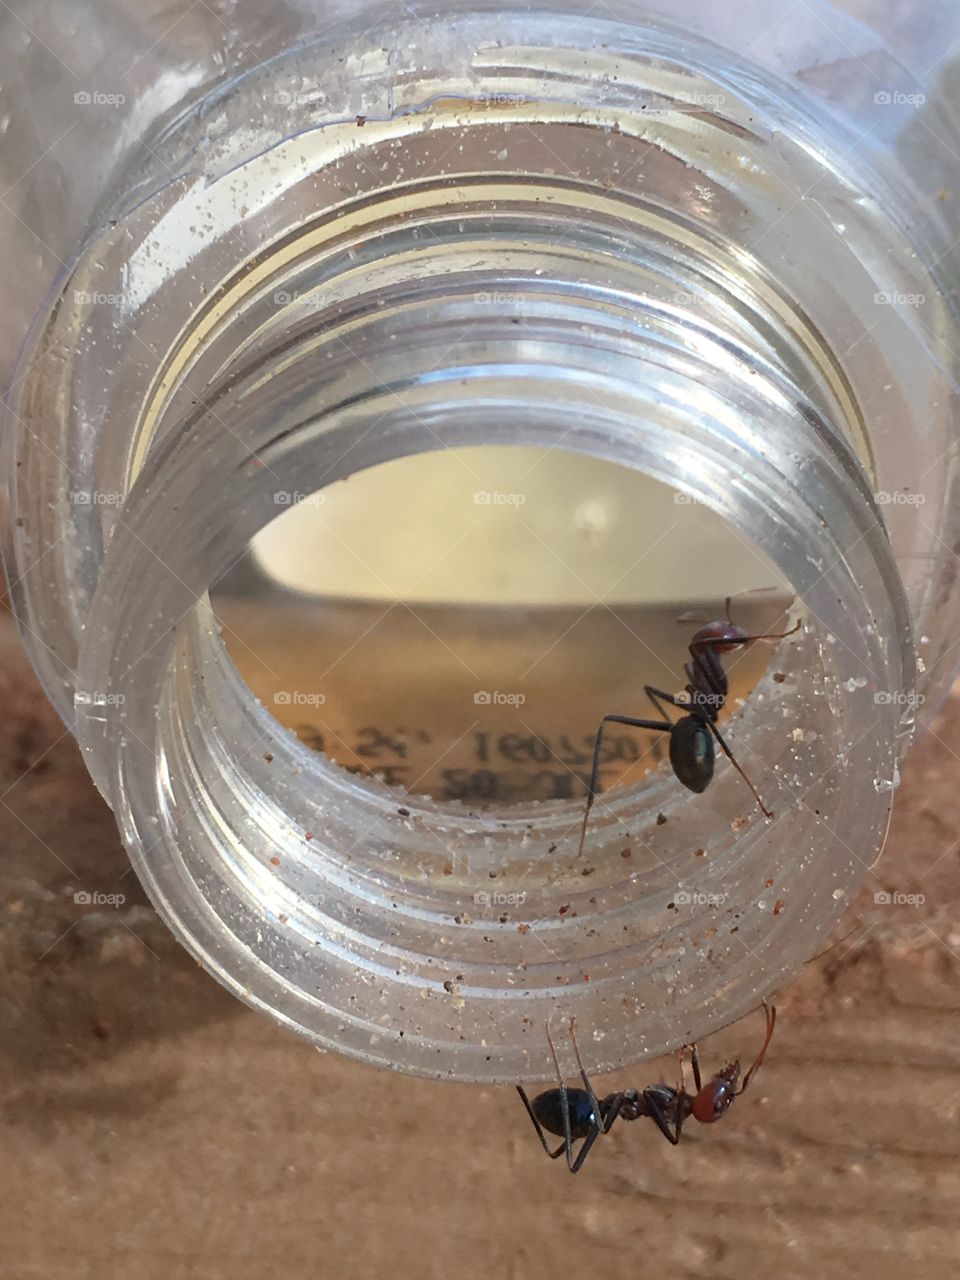 Worker ant large Australian crawling on inside rim of glass jar cream tones 